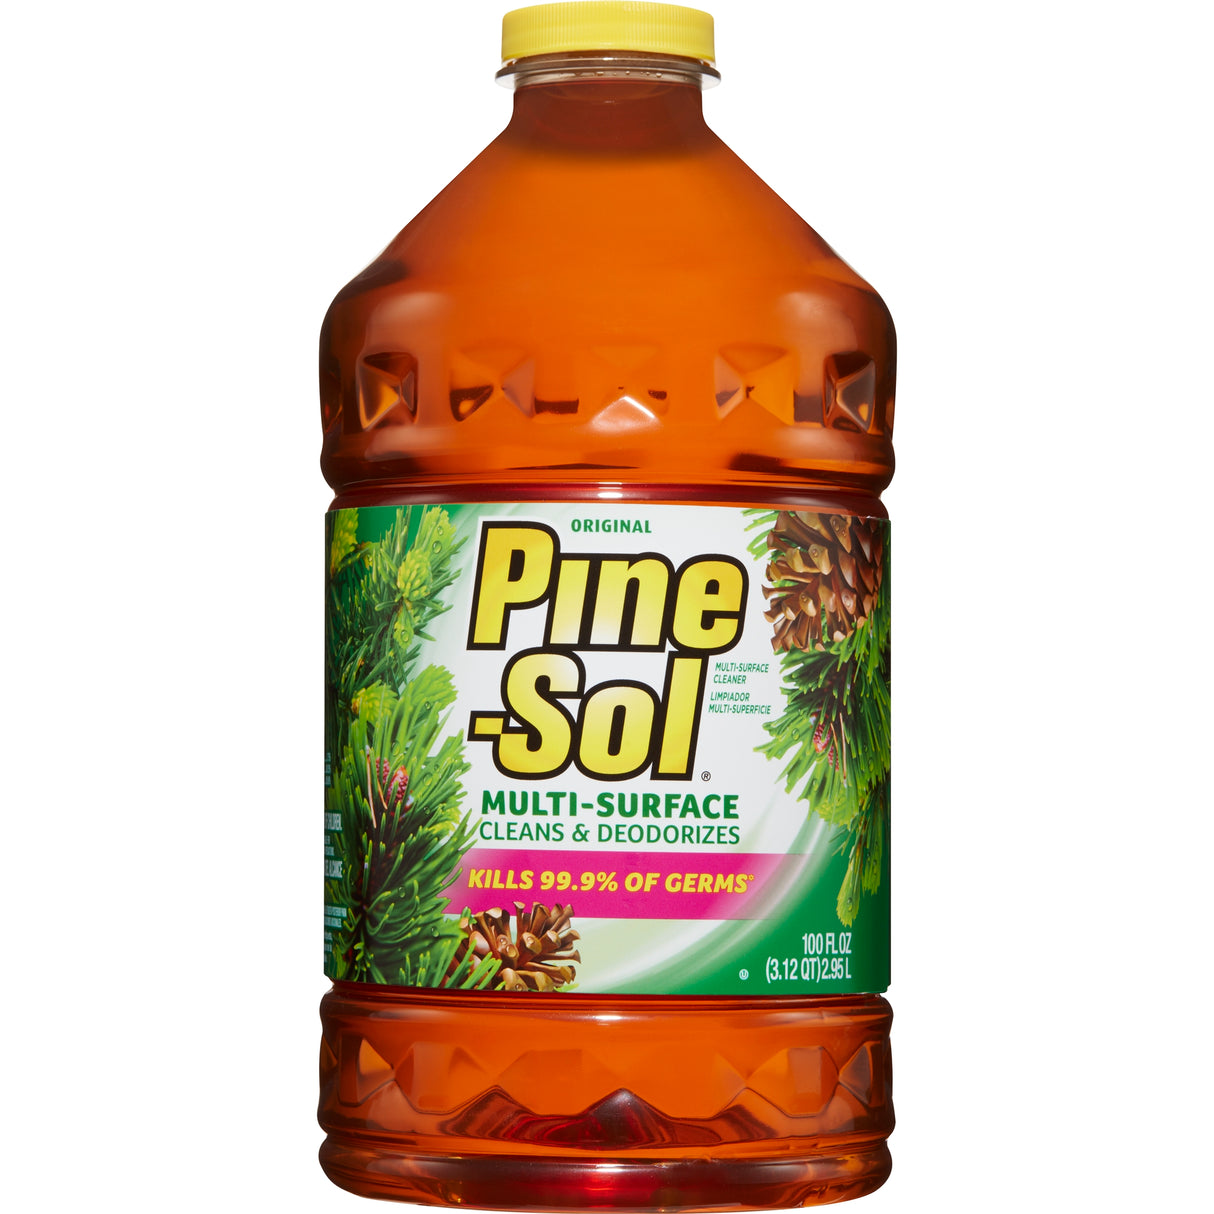 Desinfectante multisuperficie Pine-Sol, aroma a pino, 100 oz